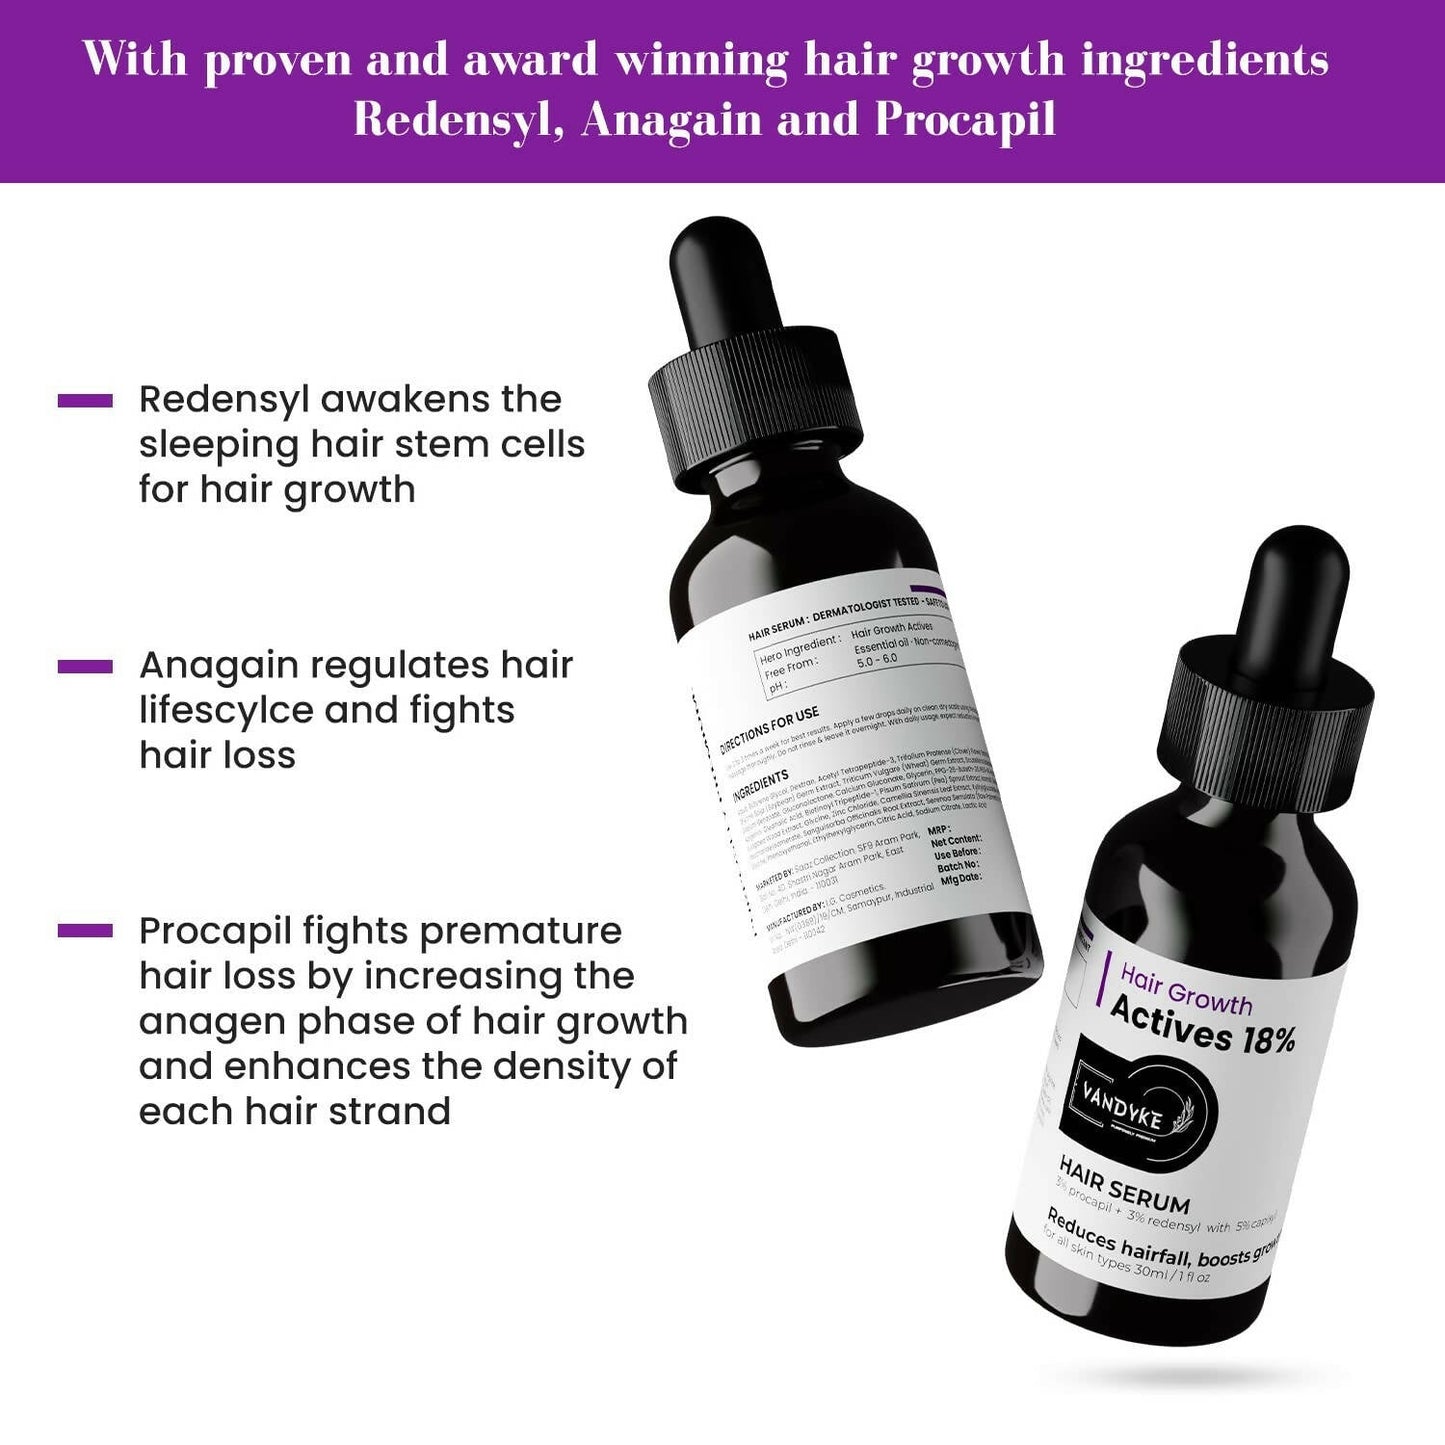 Vandyke Hair Growth Actives 18% Hair Serum